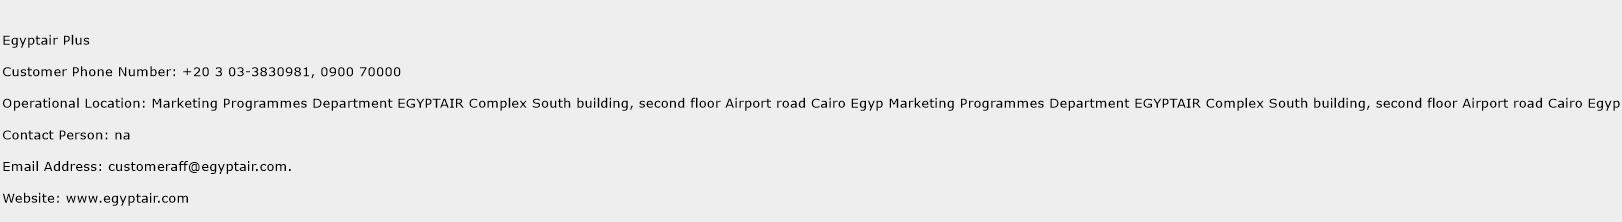 Egyptair Plus Phone Number Customer Service